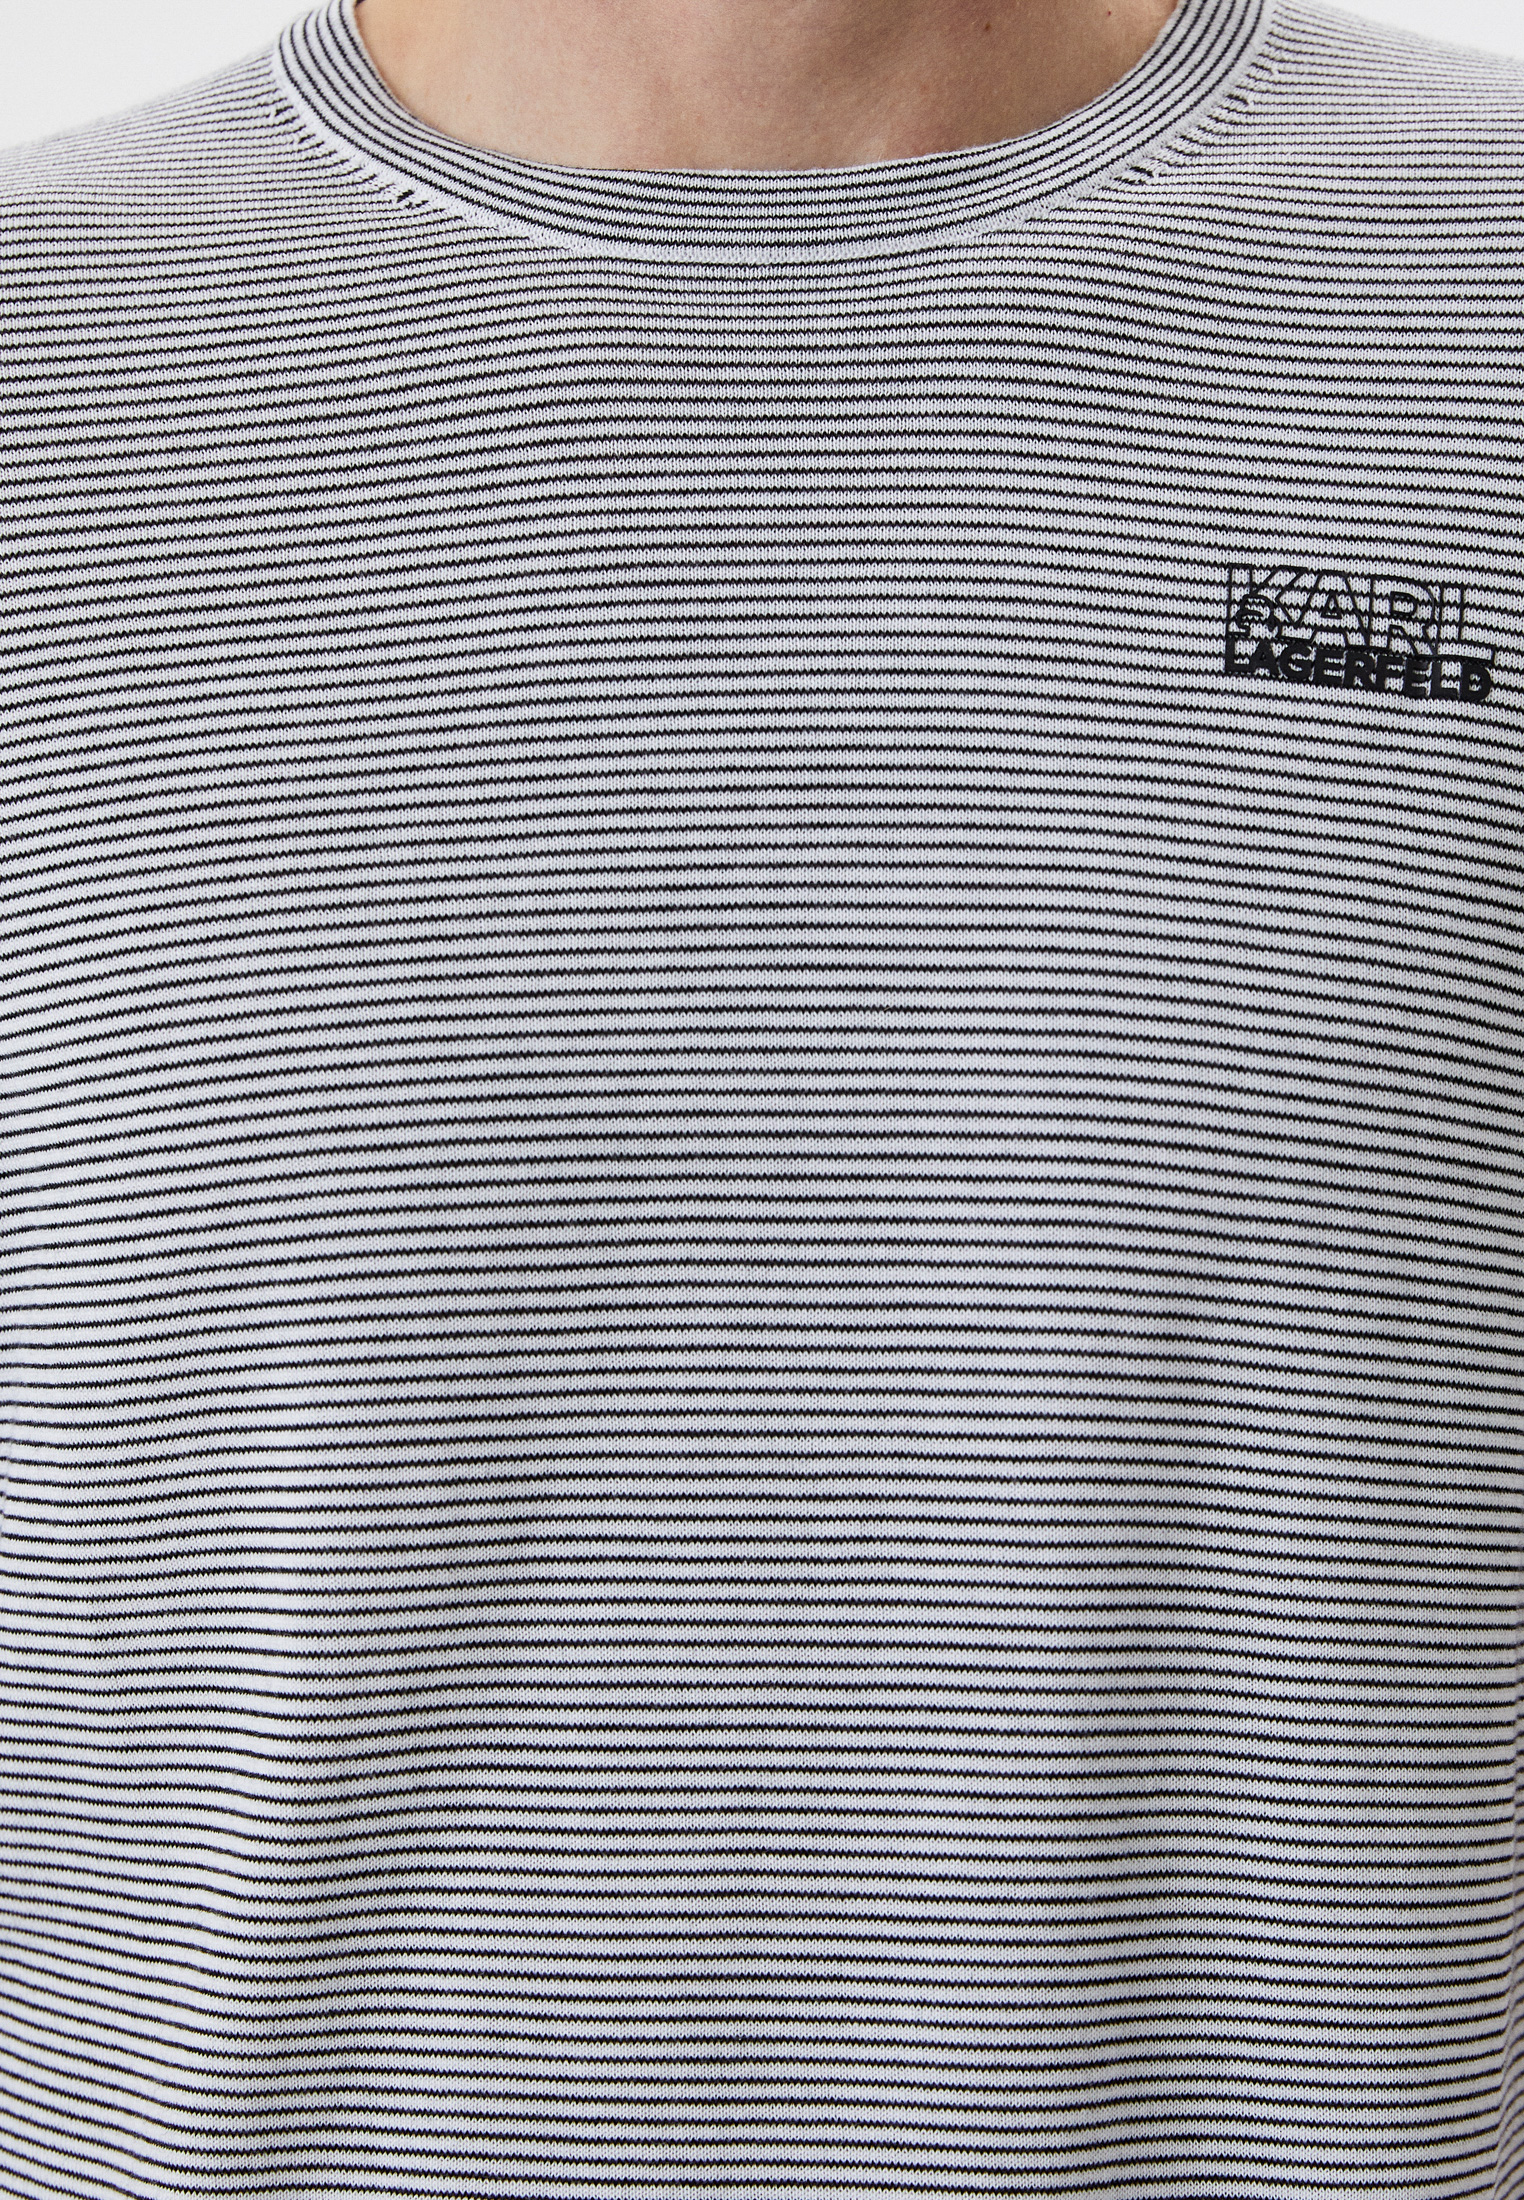 Мужская футболка Karl Lagerfeld (Карл Лагерфельд) 521301-655033: изображение 4